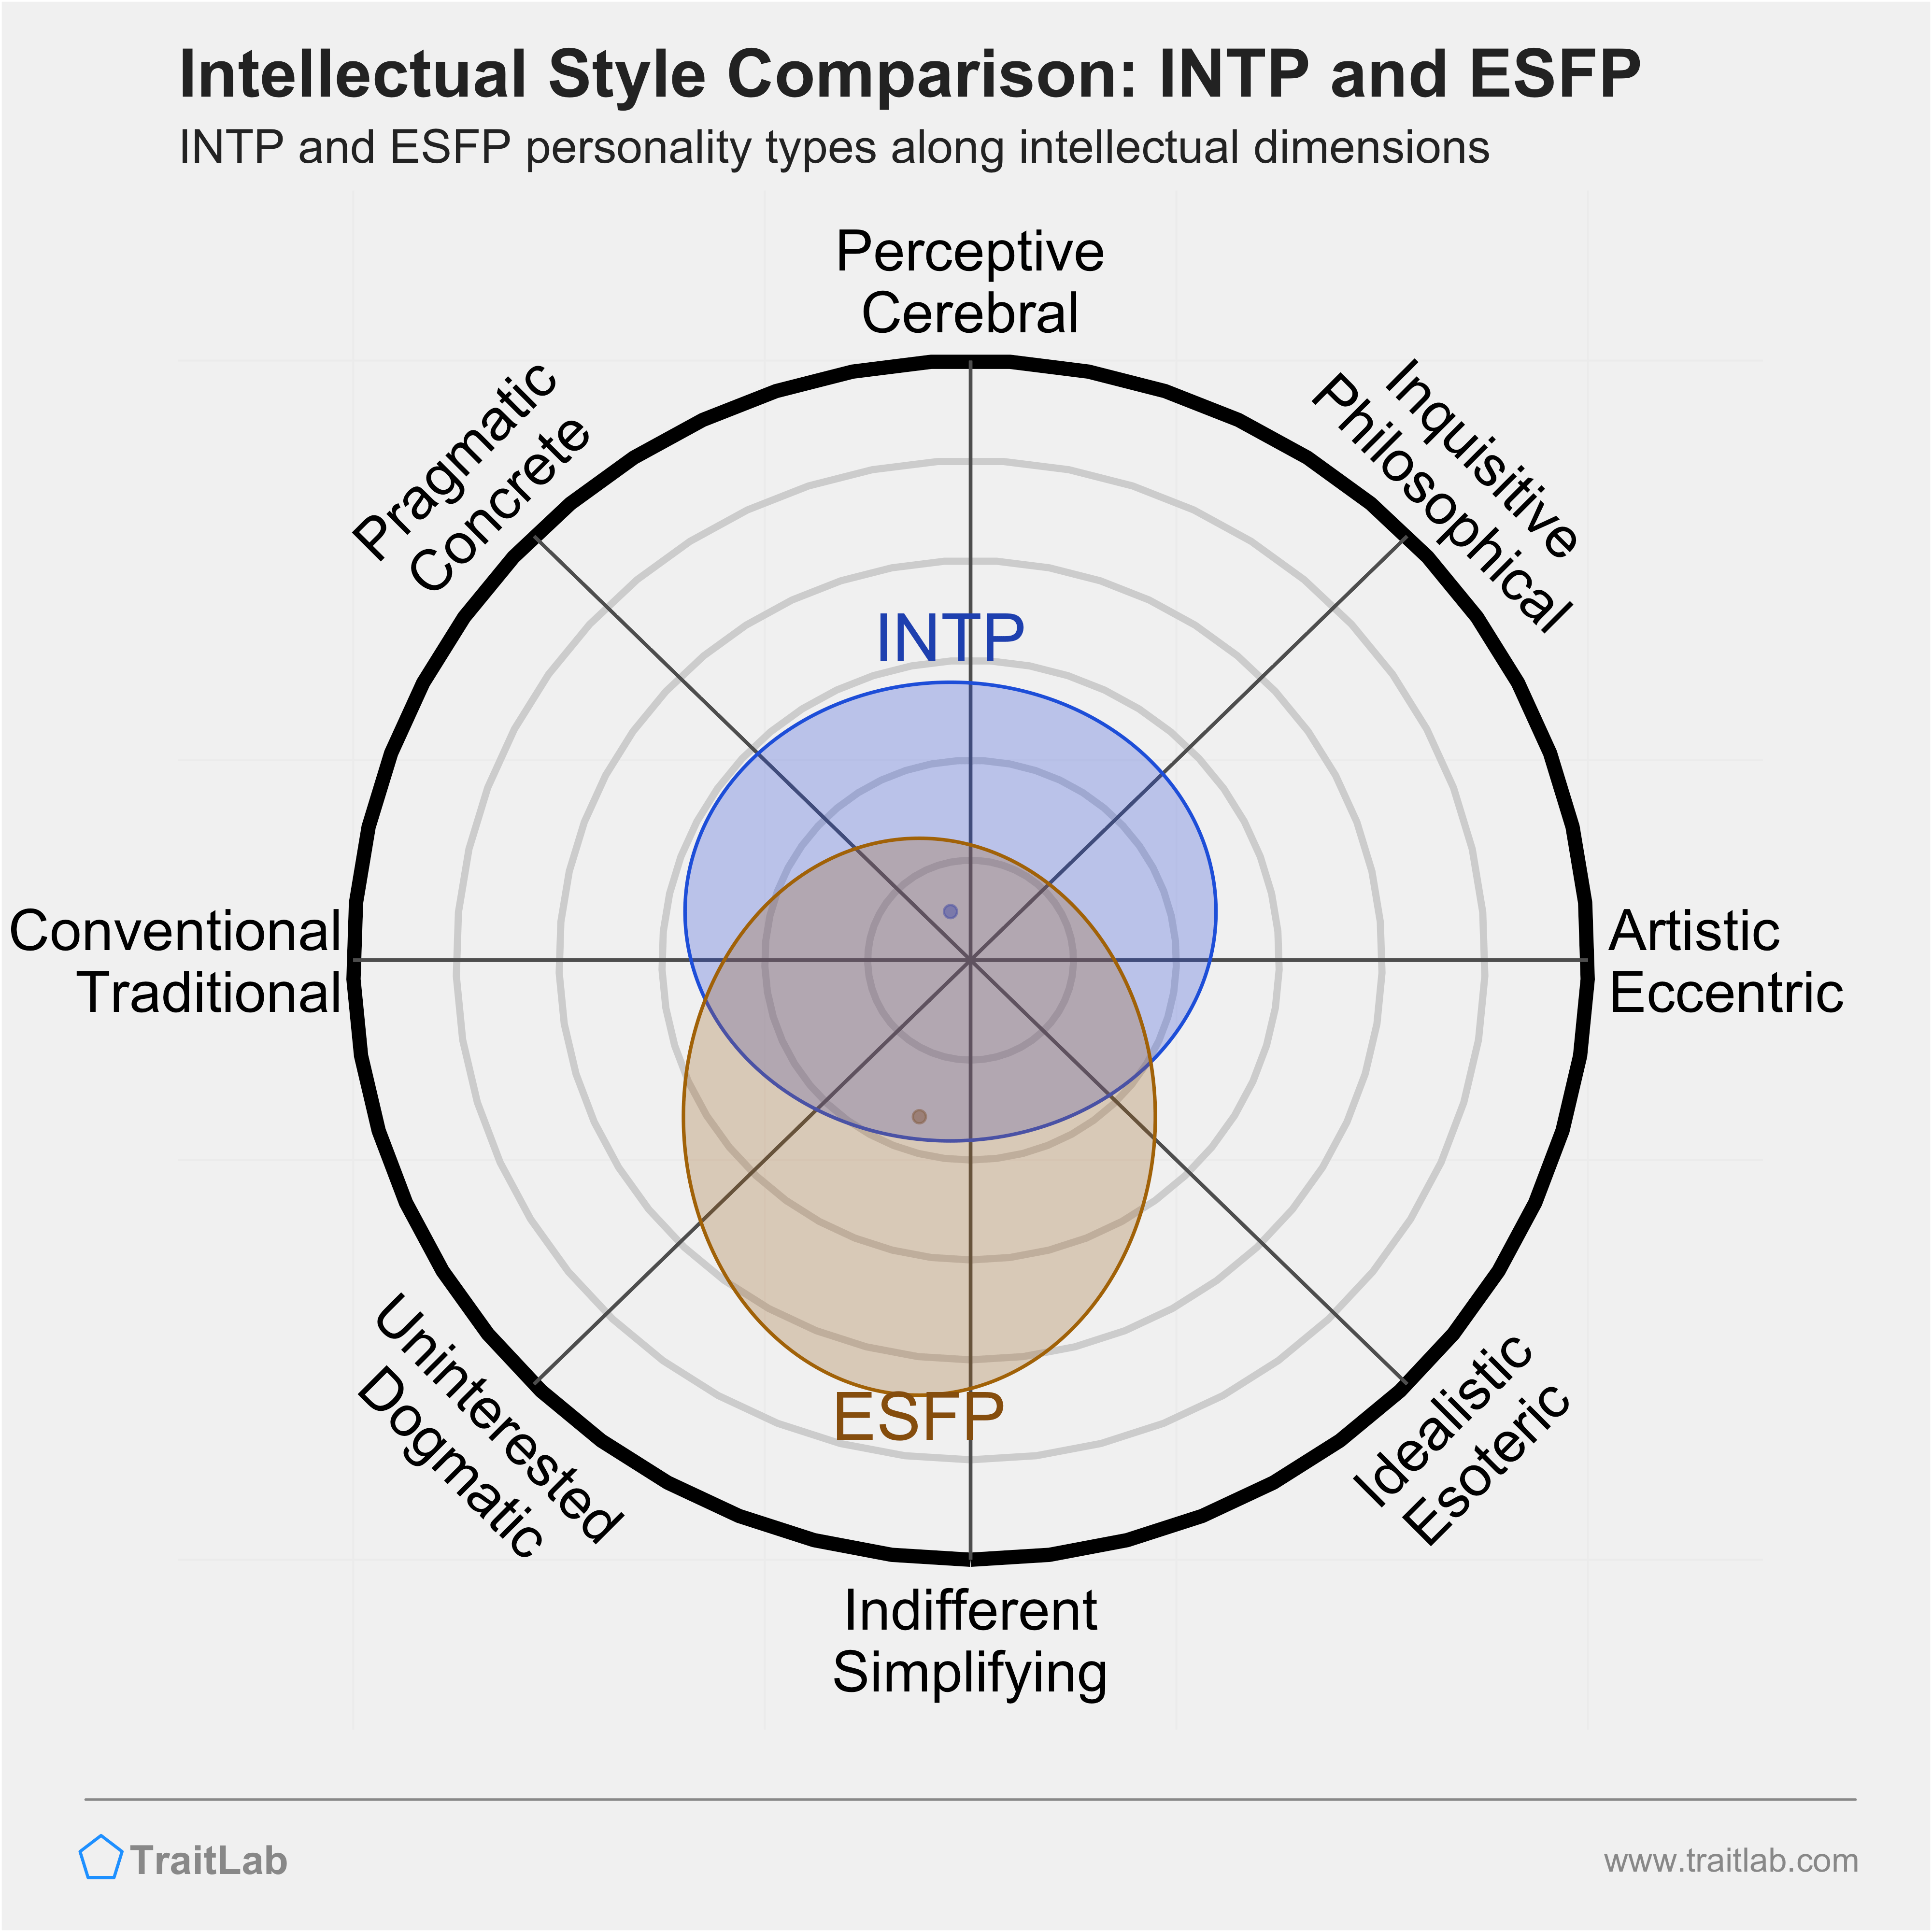 INTP and ESFP comparison across intellectual dimensions